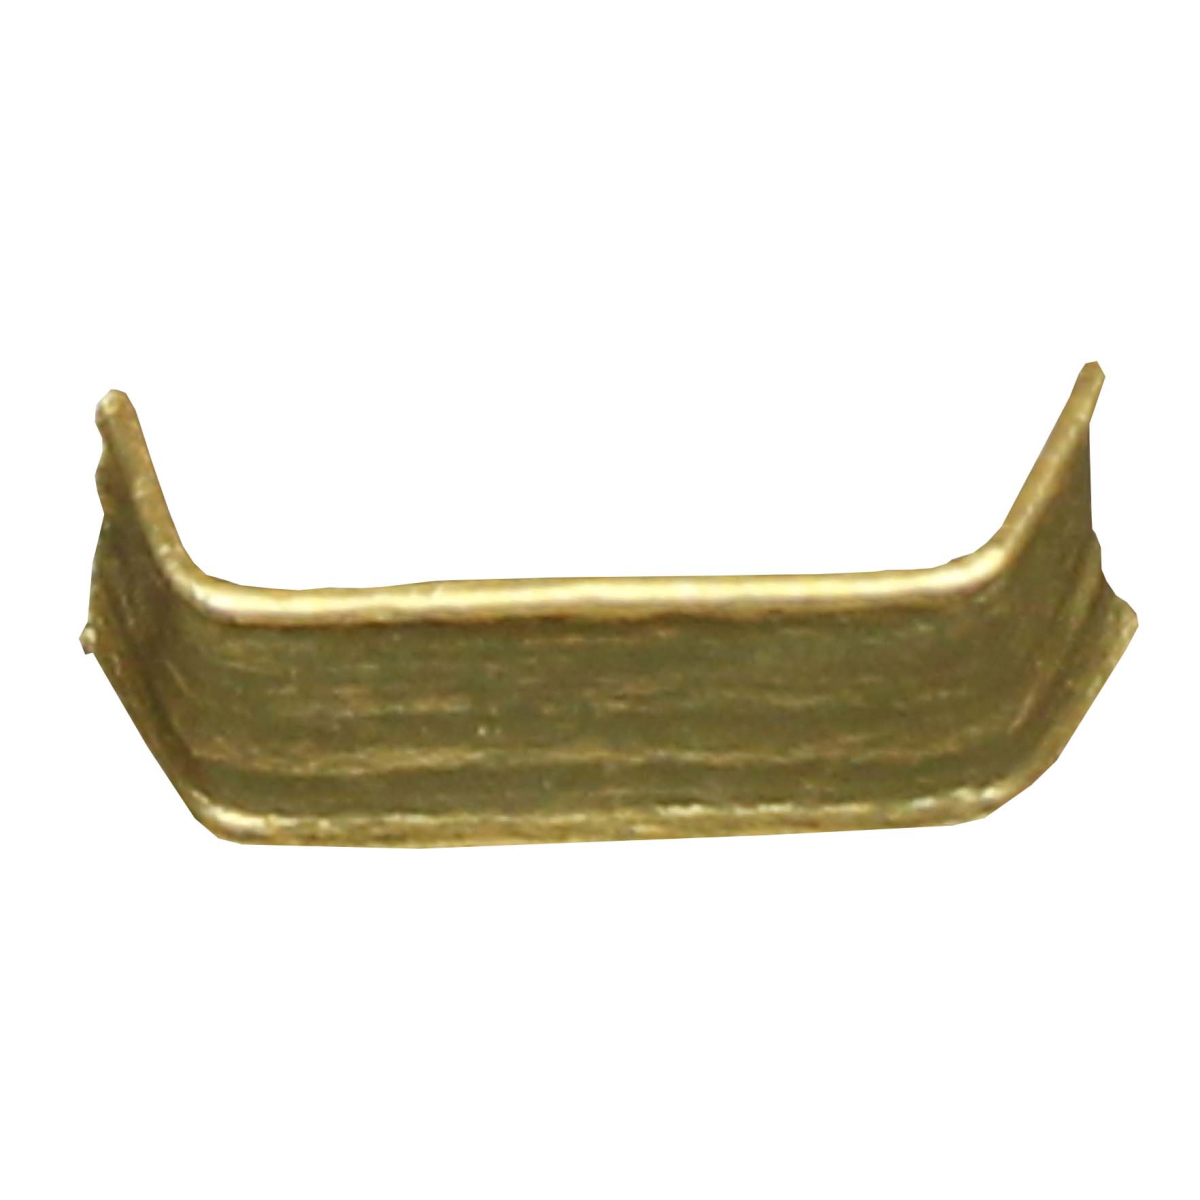 CLIPSE vorgebogen in  u-Form | gold
40 mm x 8 mm / 2-Draht 0,50 mm